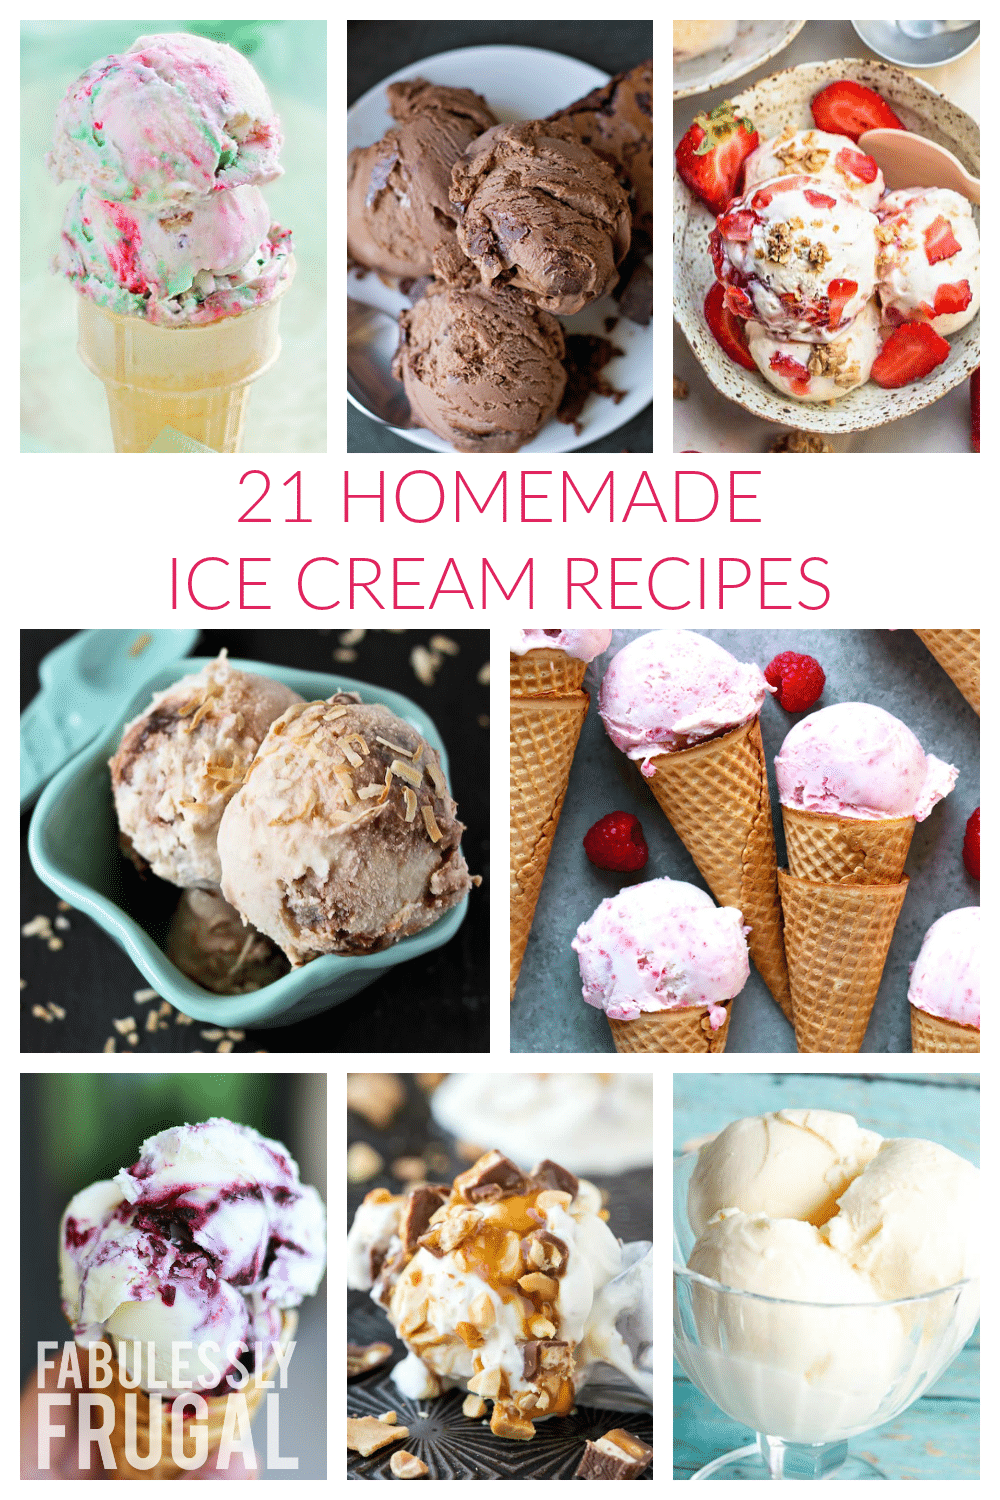 Homemade ice cream recipes